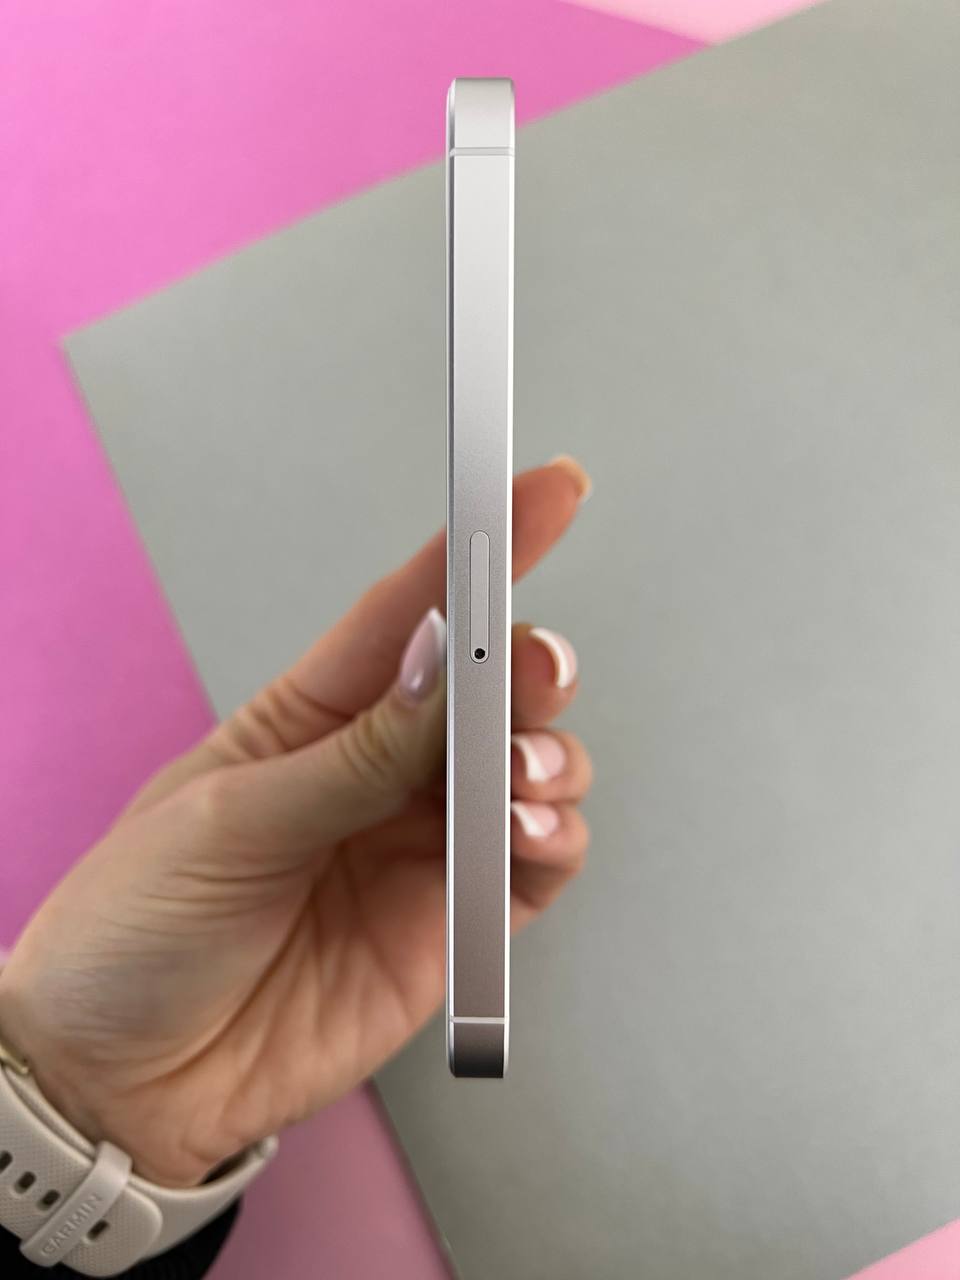 Apple iPhone SE 32gb Silver